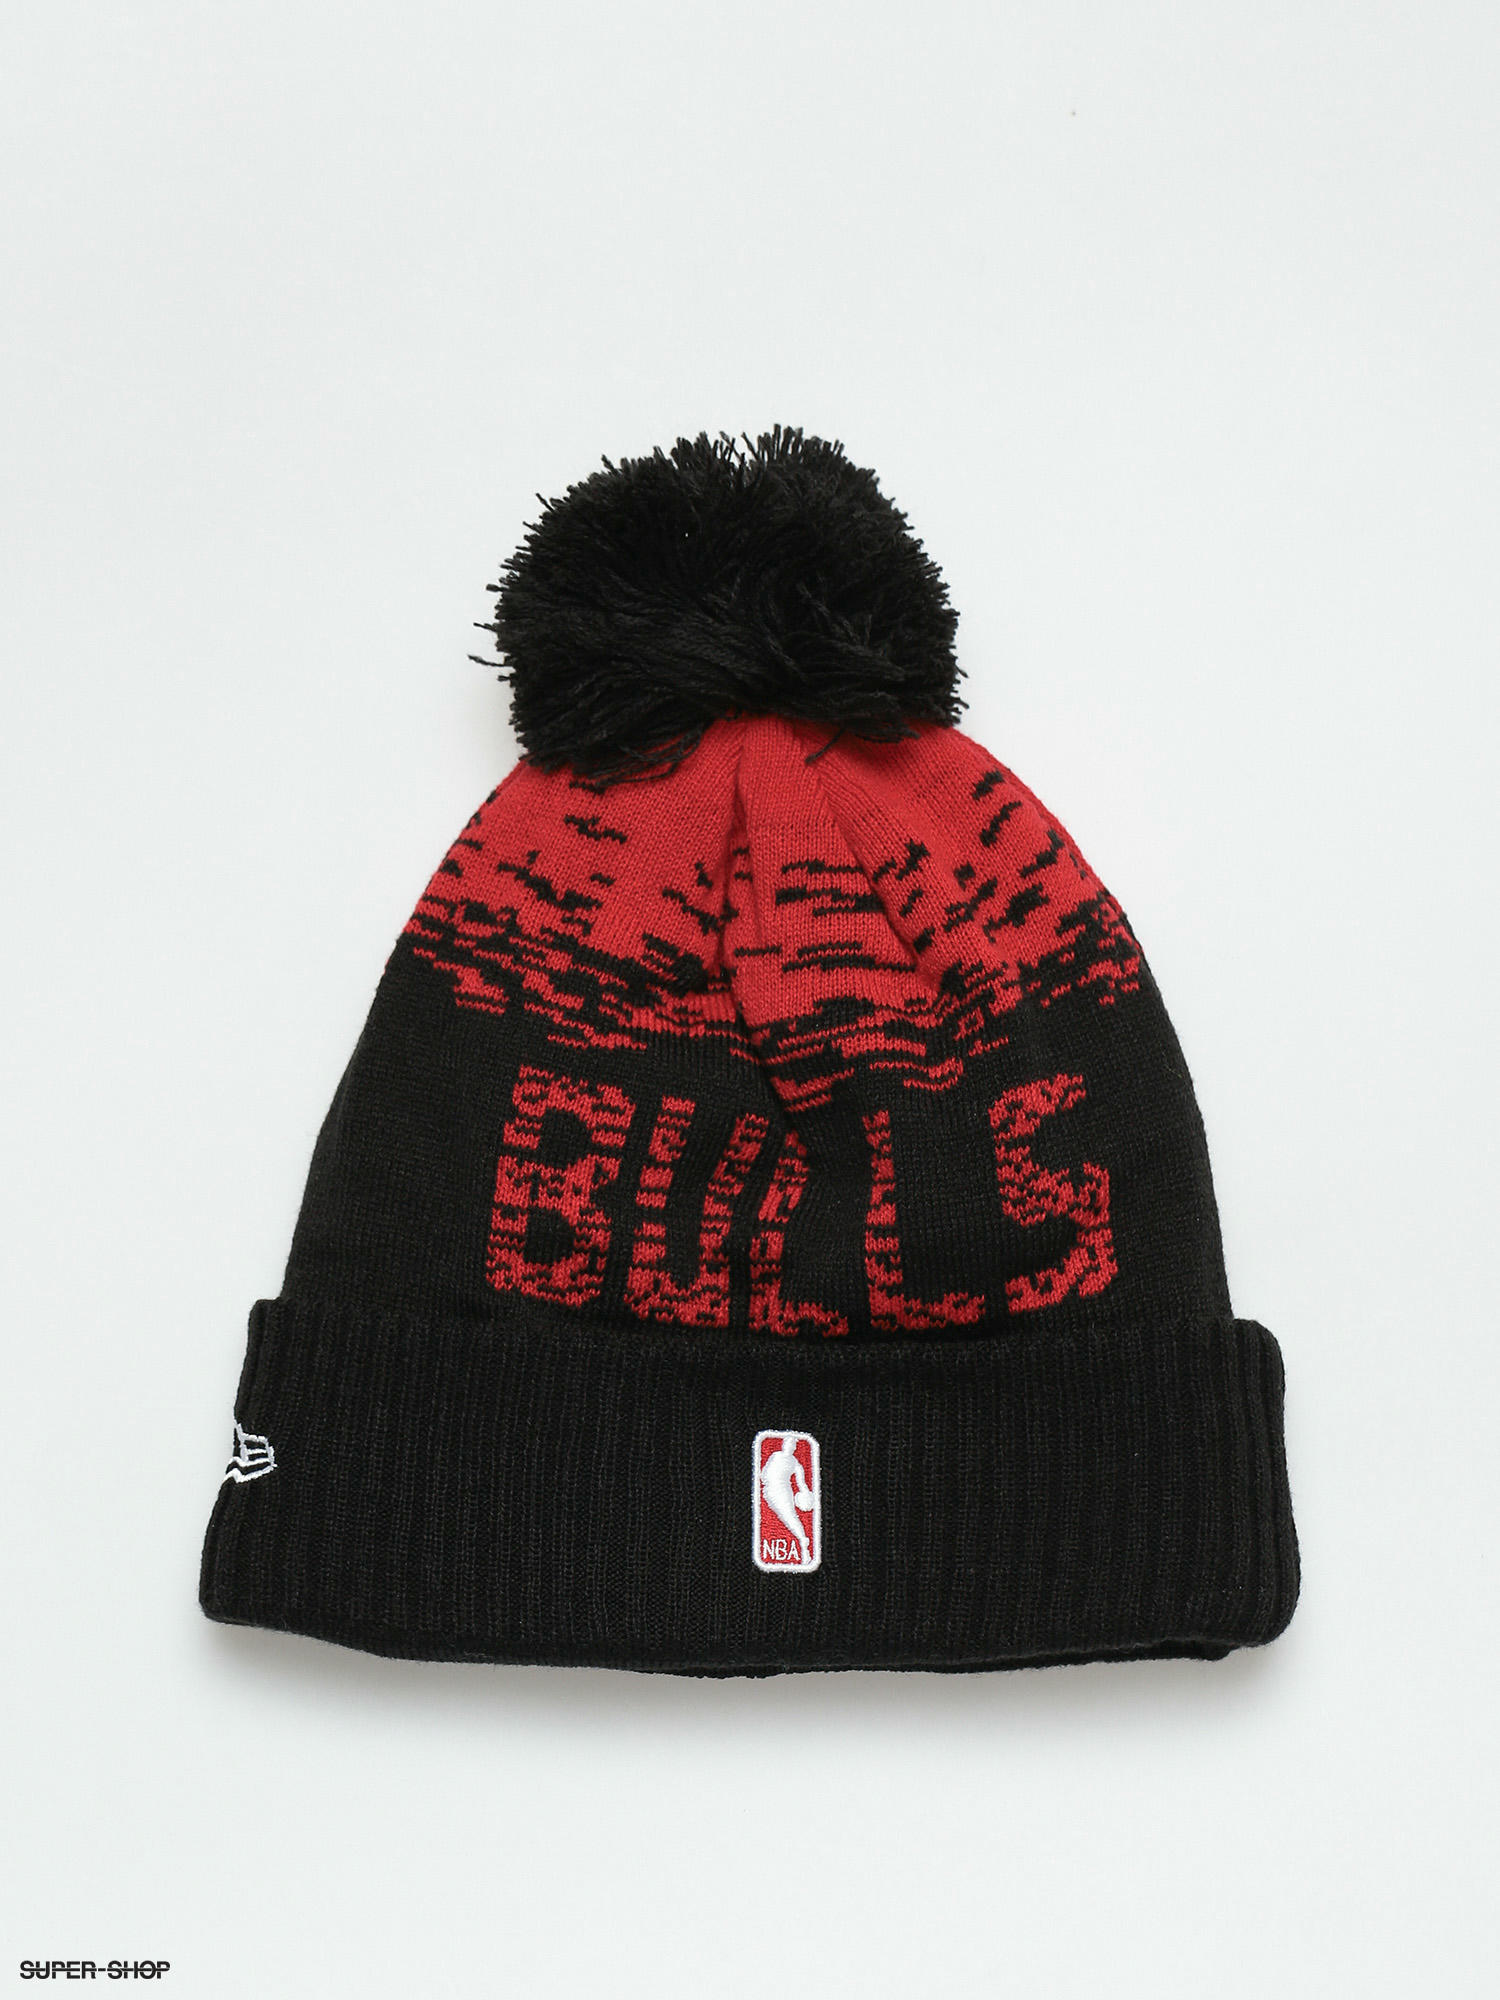 NBA, Accessories, Chicago Bulls Winter Hat